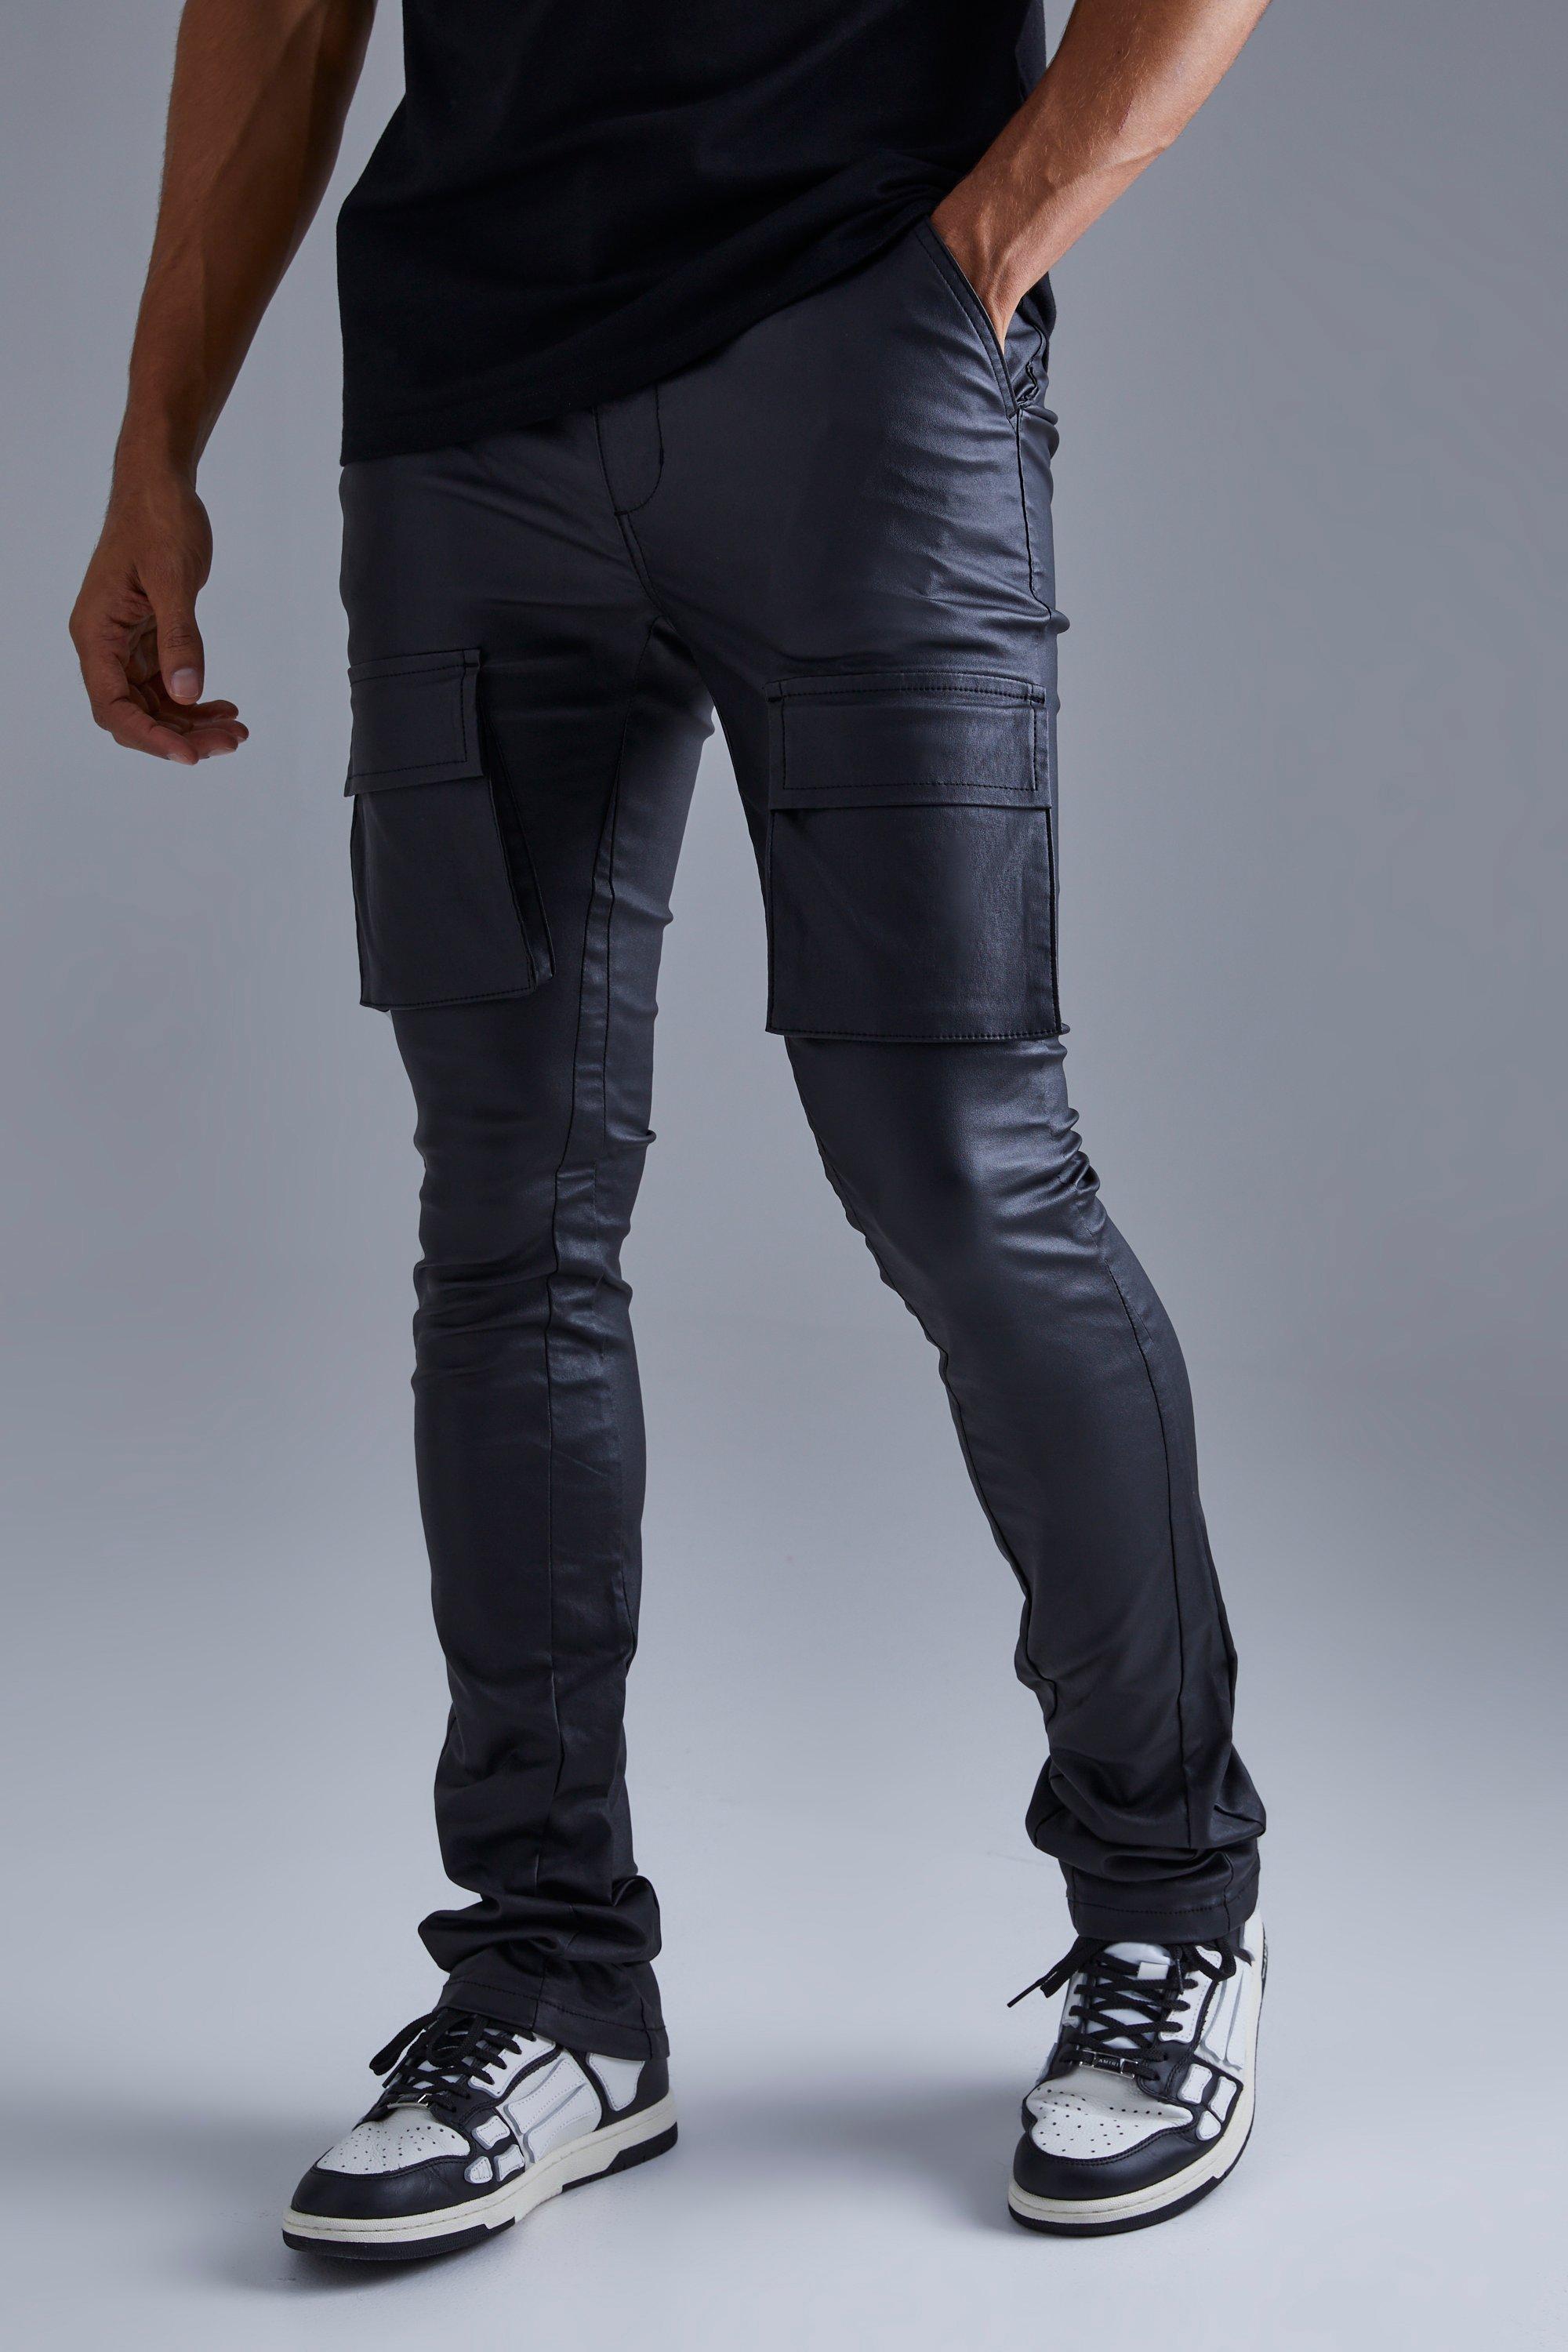 Pantalon sous-vêtement - Homme||Base layer pants - Men’s